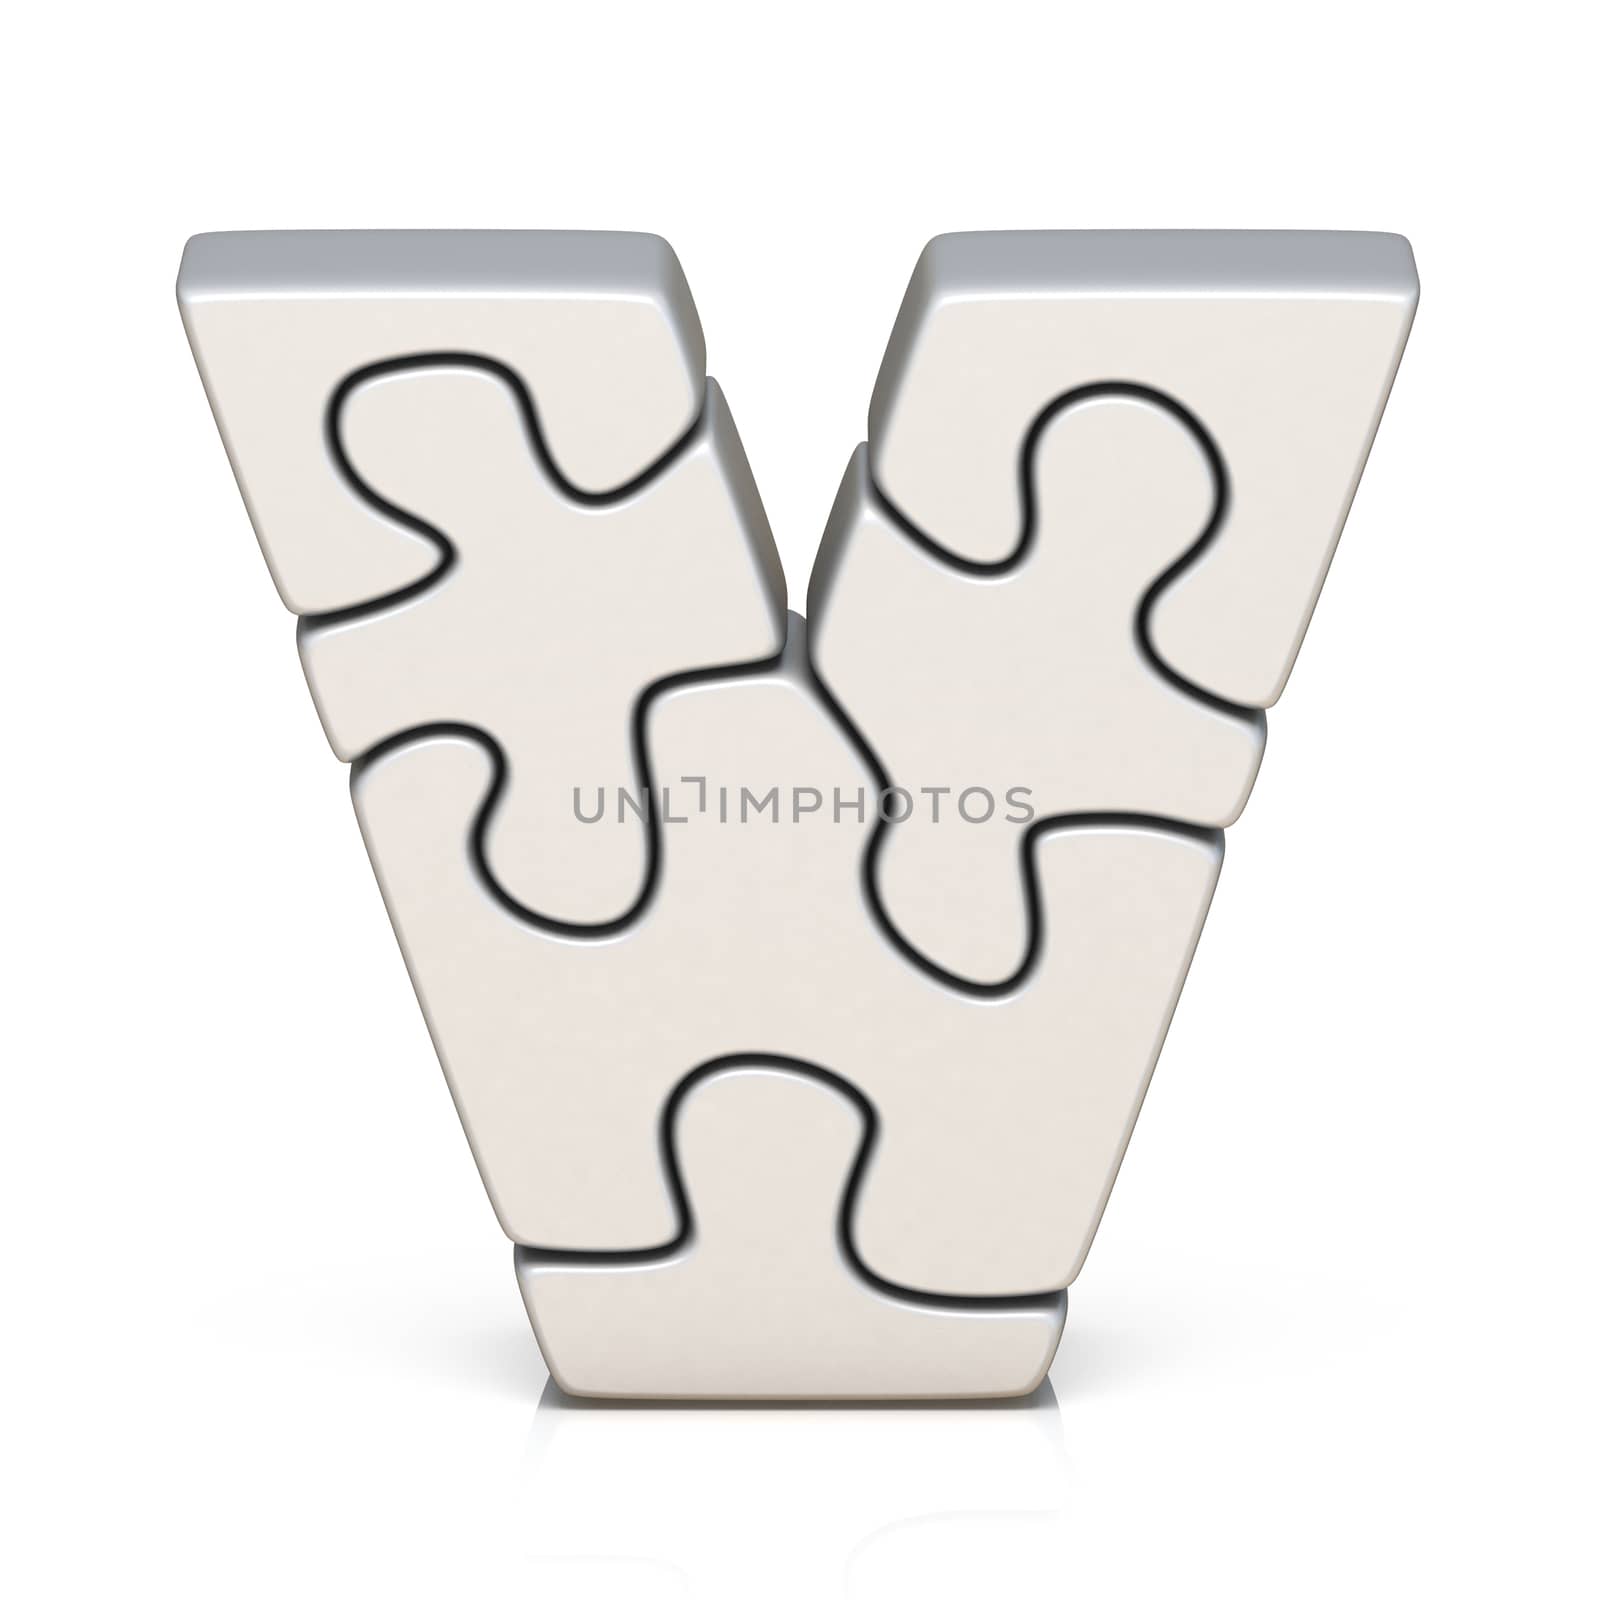 White puzzle jigsaw letter V 3D render illustration isolated on white background